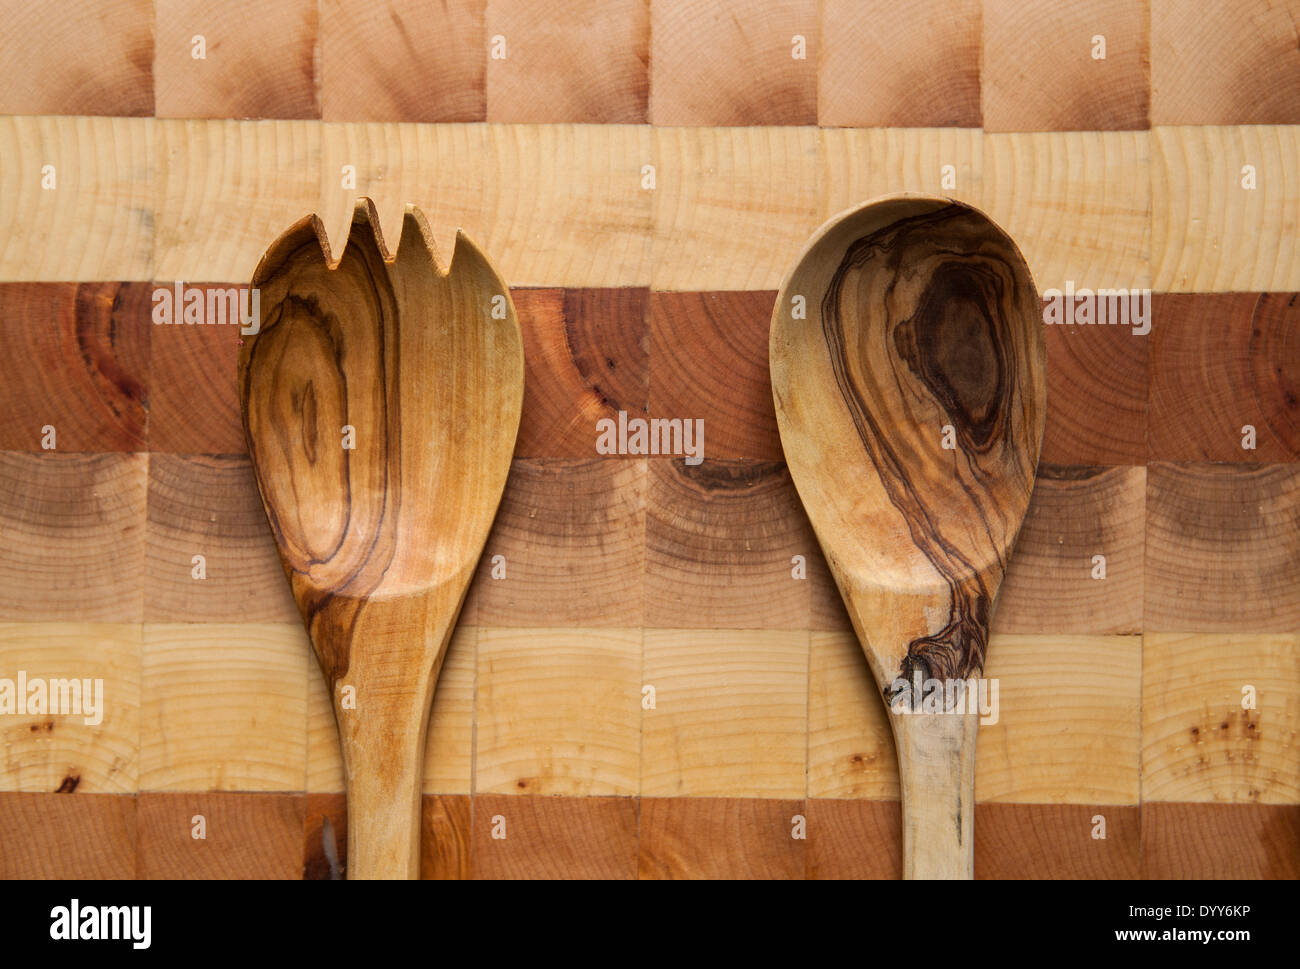 Wooden utensils on an end grain cutting board Stock Photo